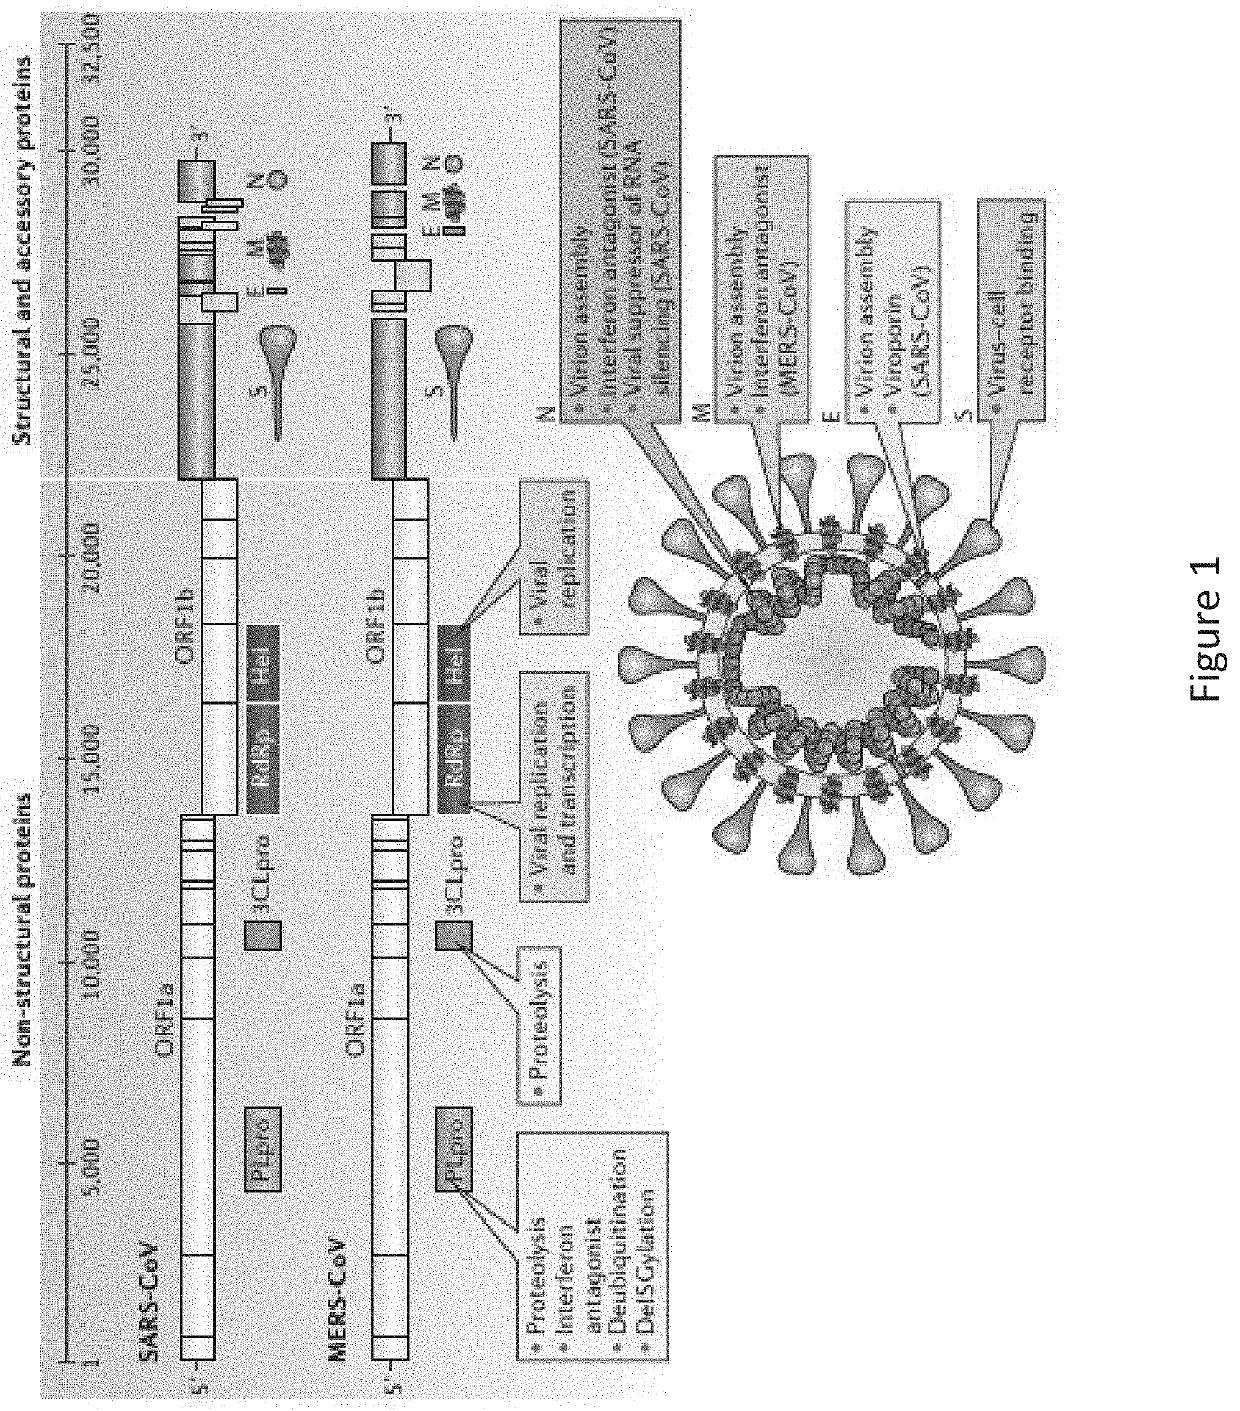 Coronavirus irna compositions and methods of use thereof